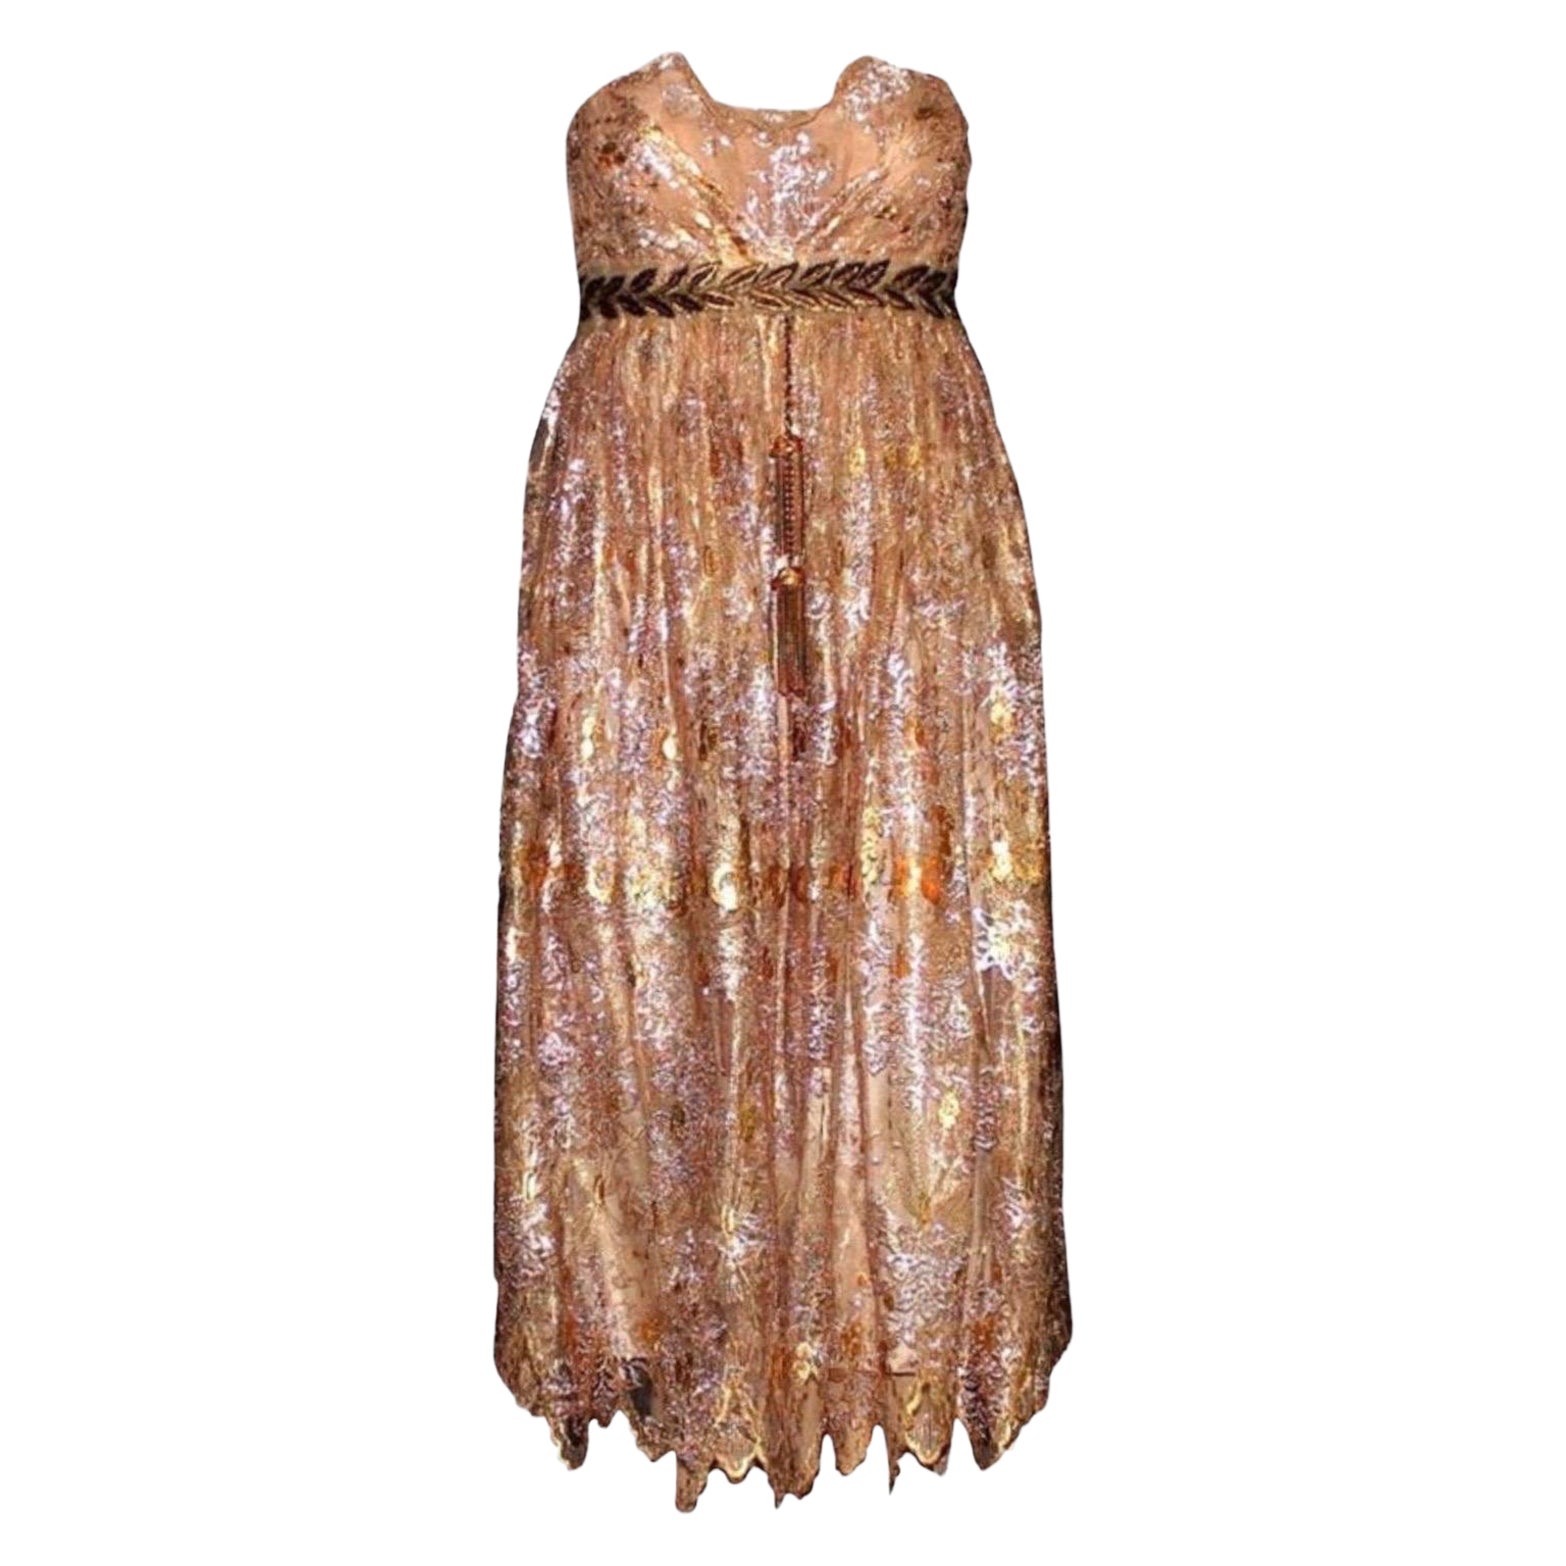 UNWORN Dolce & Gabbana 2006 Gold Metallic Lace Tassel Empire Dress Gown 42 For Sale